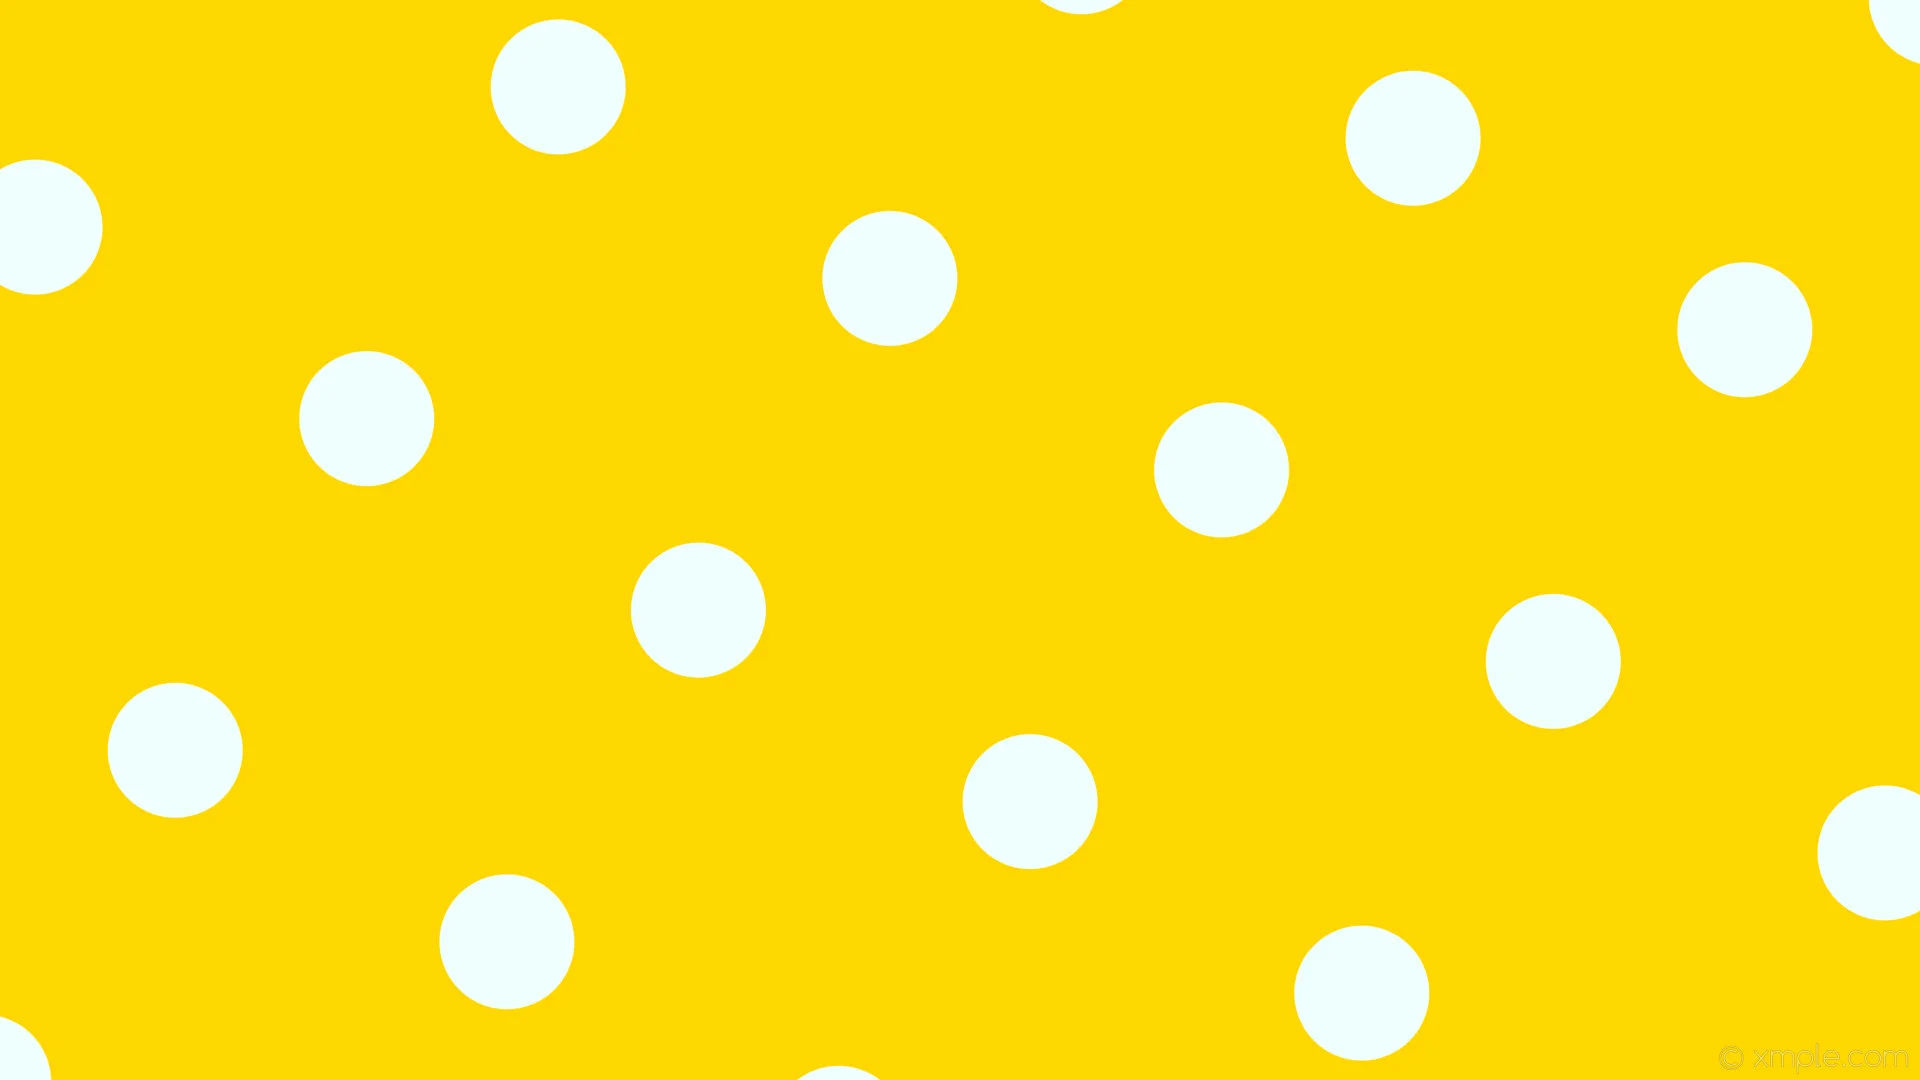 Wallpaper polka dots spots yellow white gold azure #ffd700 #f0ffff 150 135p...